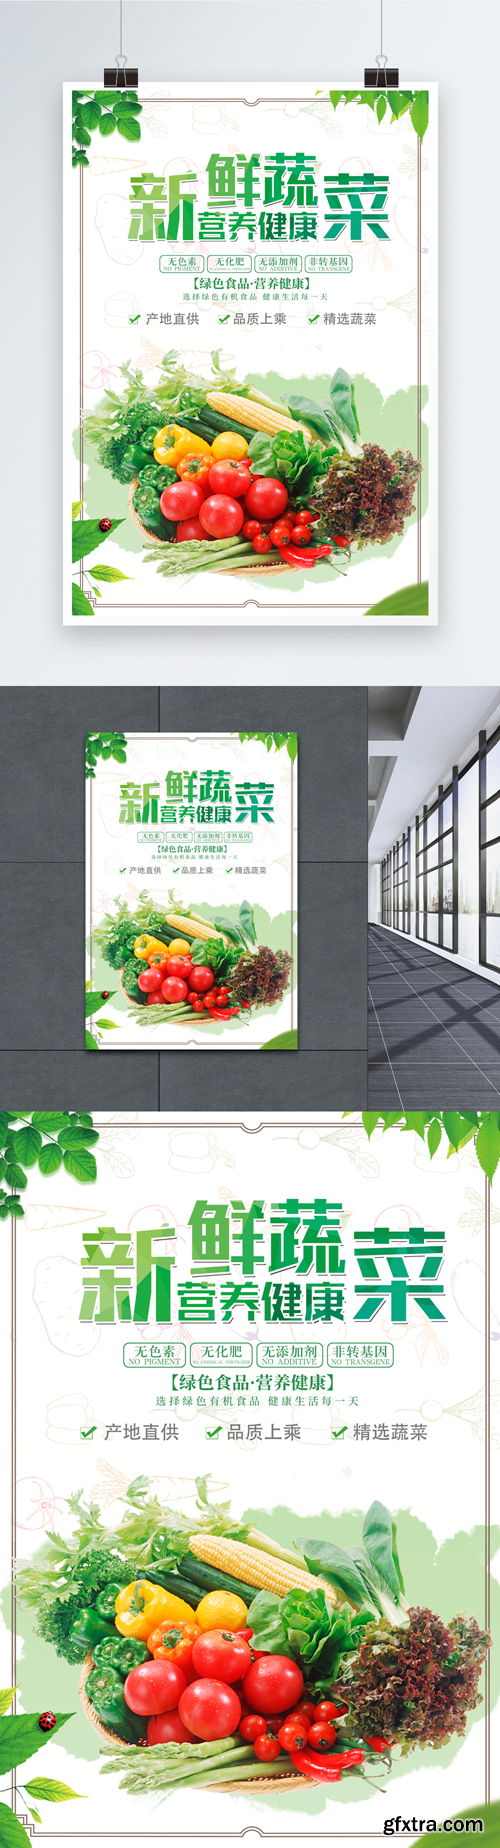 fresh green vegetables publicity poster